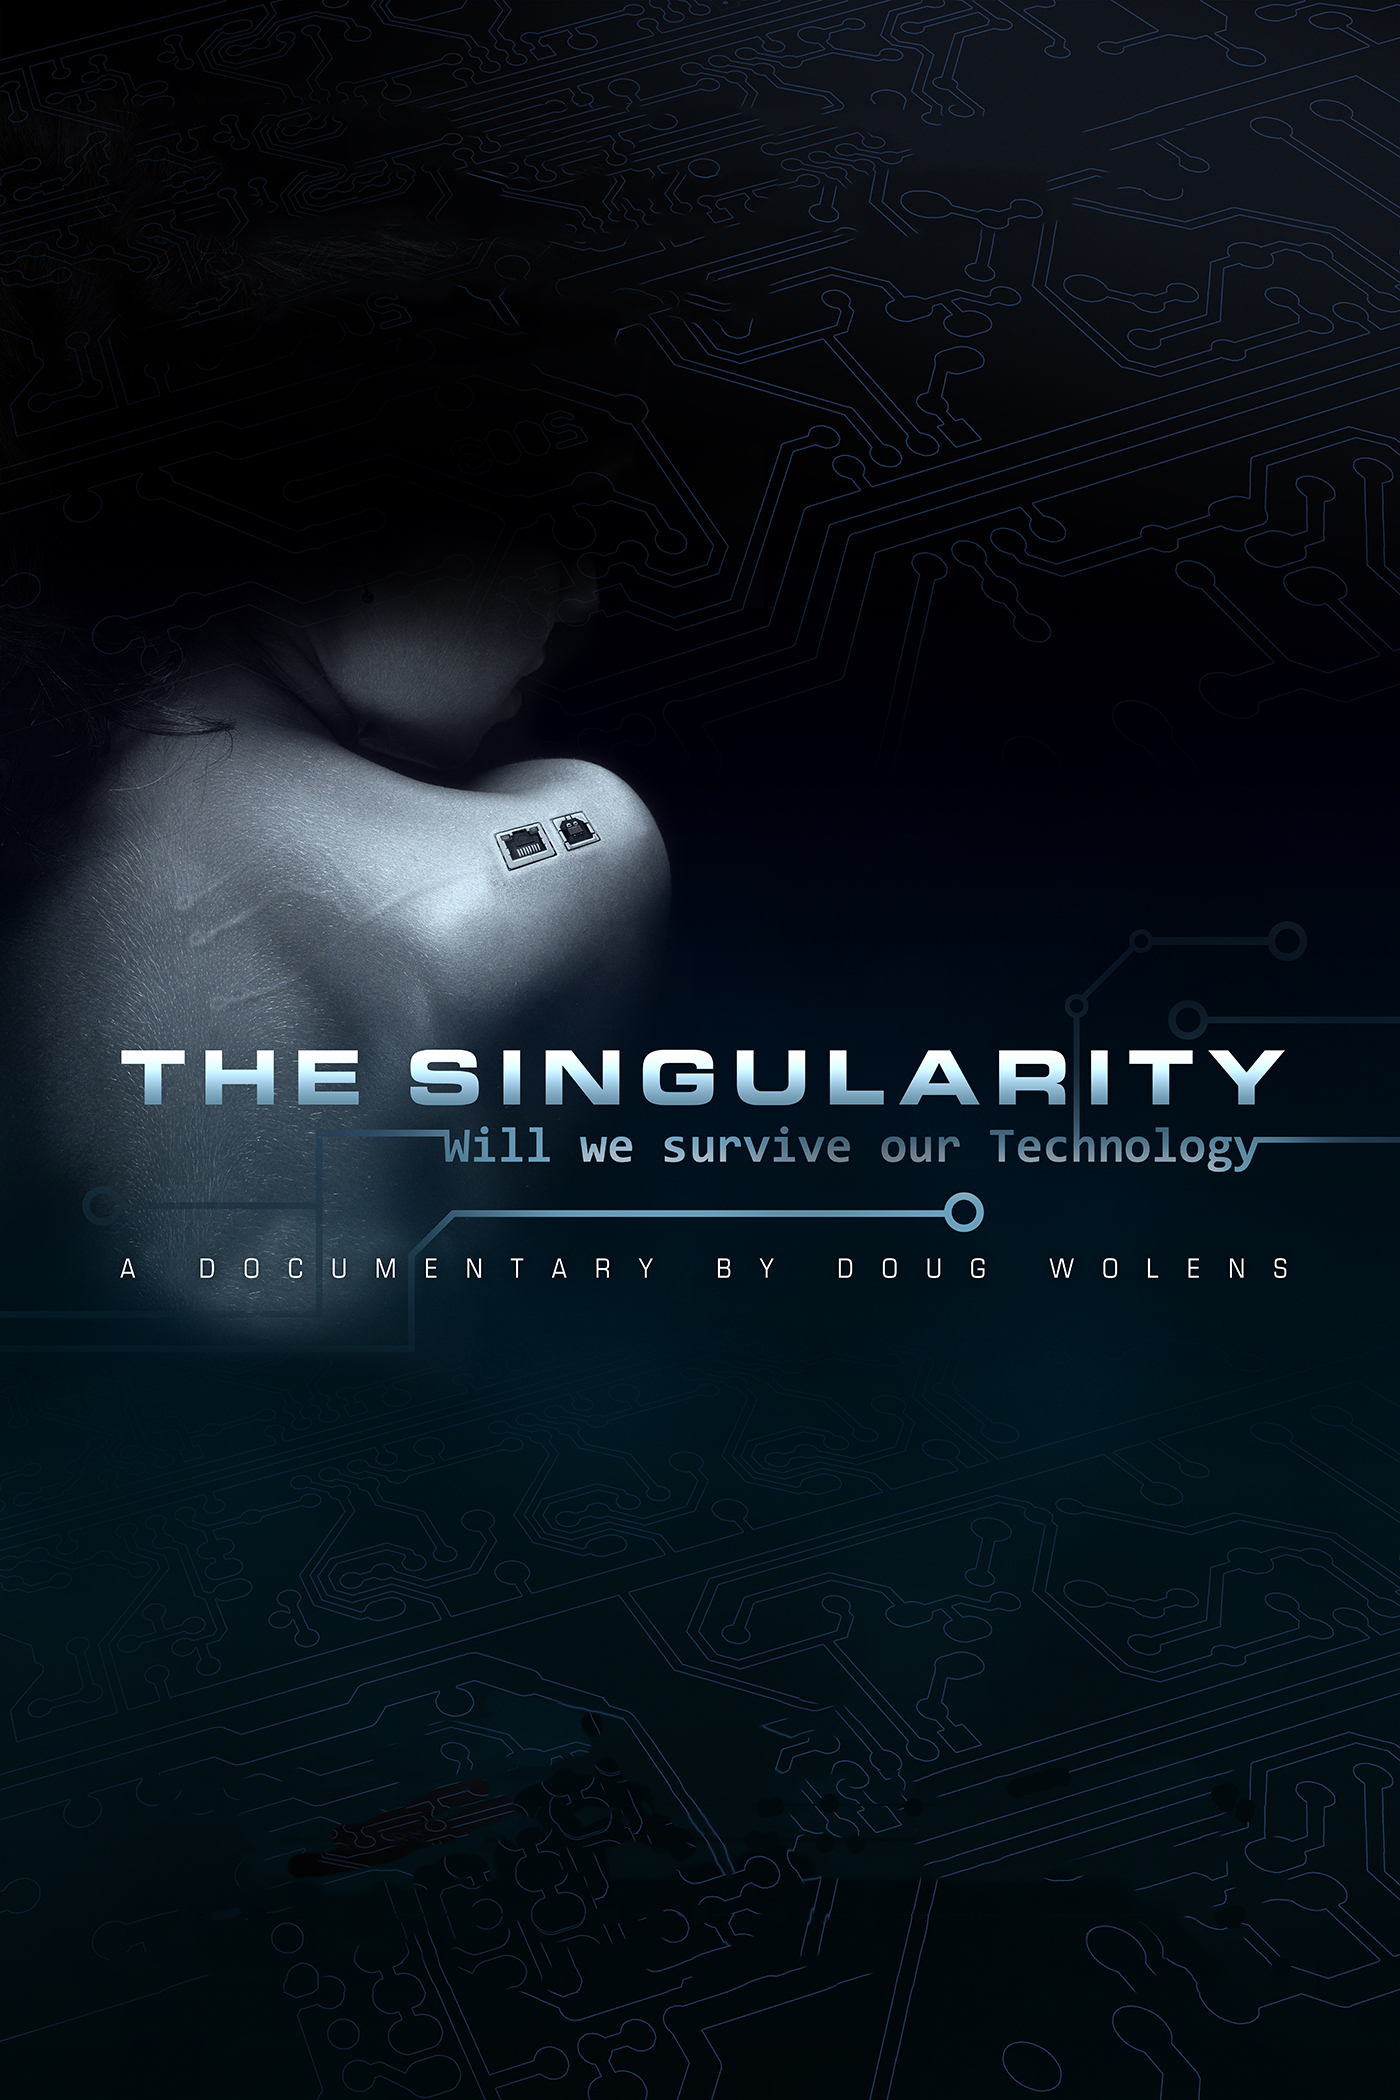 singularity movie